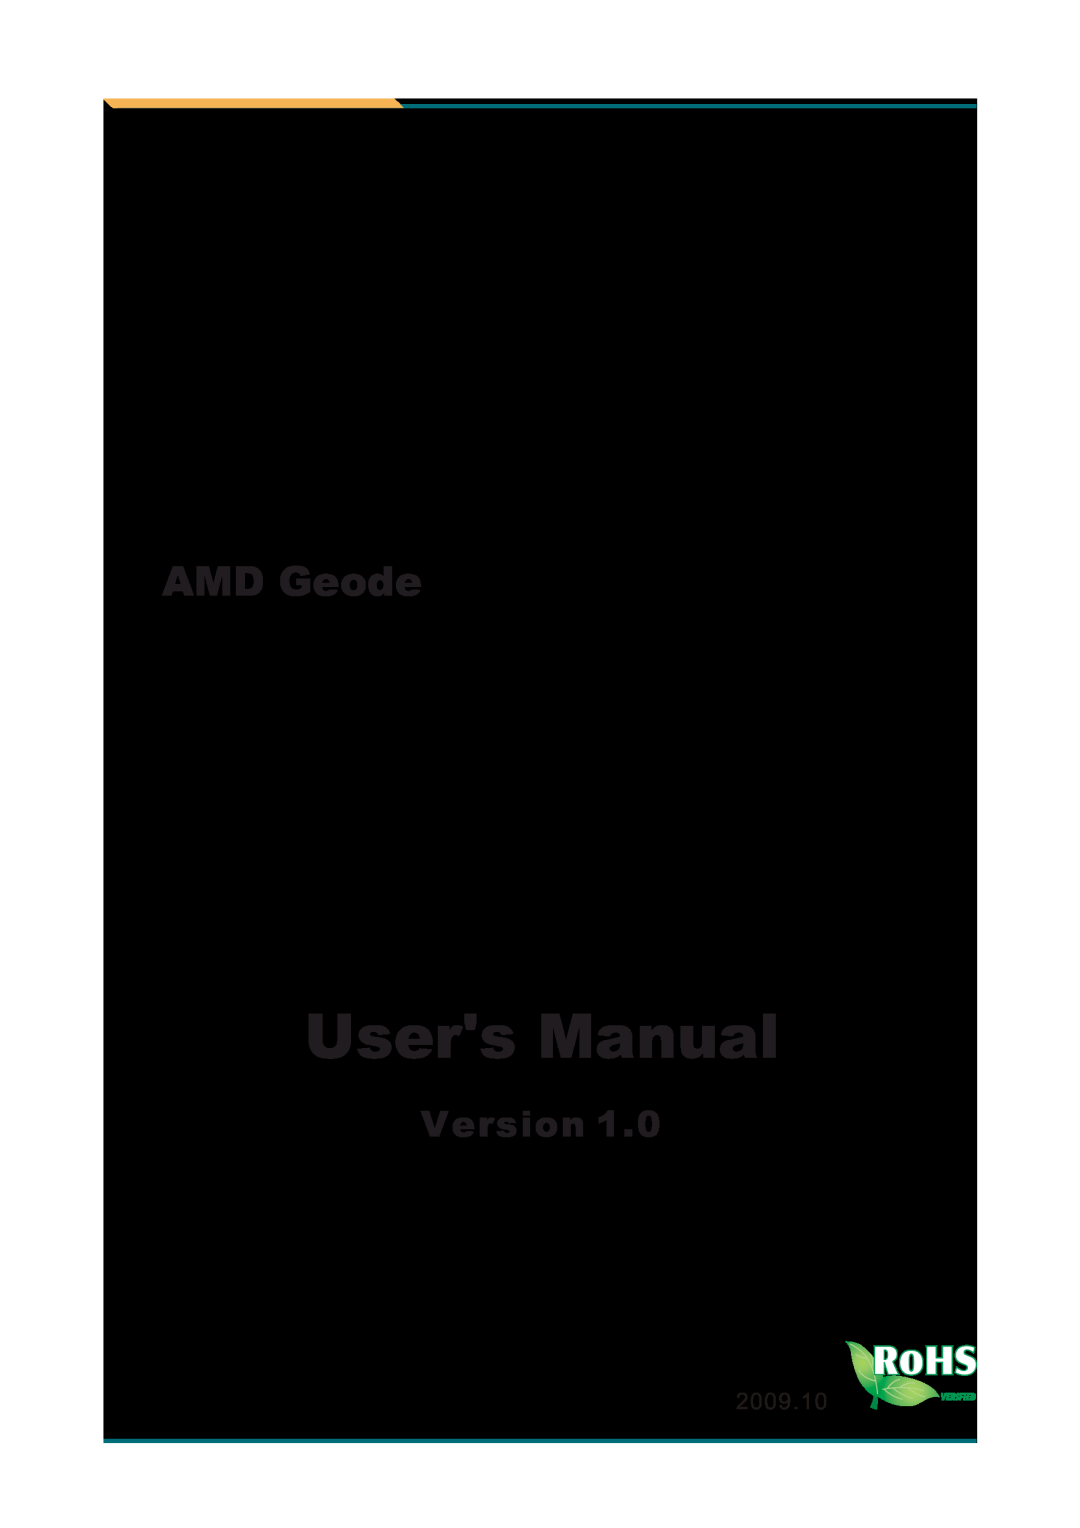 AMD SBX-5363 manual Version, Users Manual, AMD Geode 3.5 Embedded Board, 2009.10 